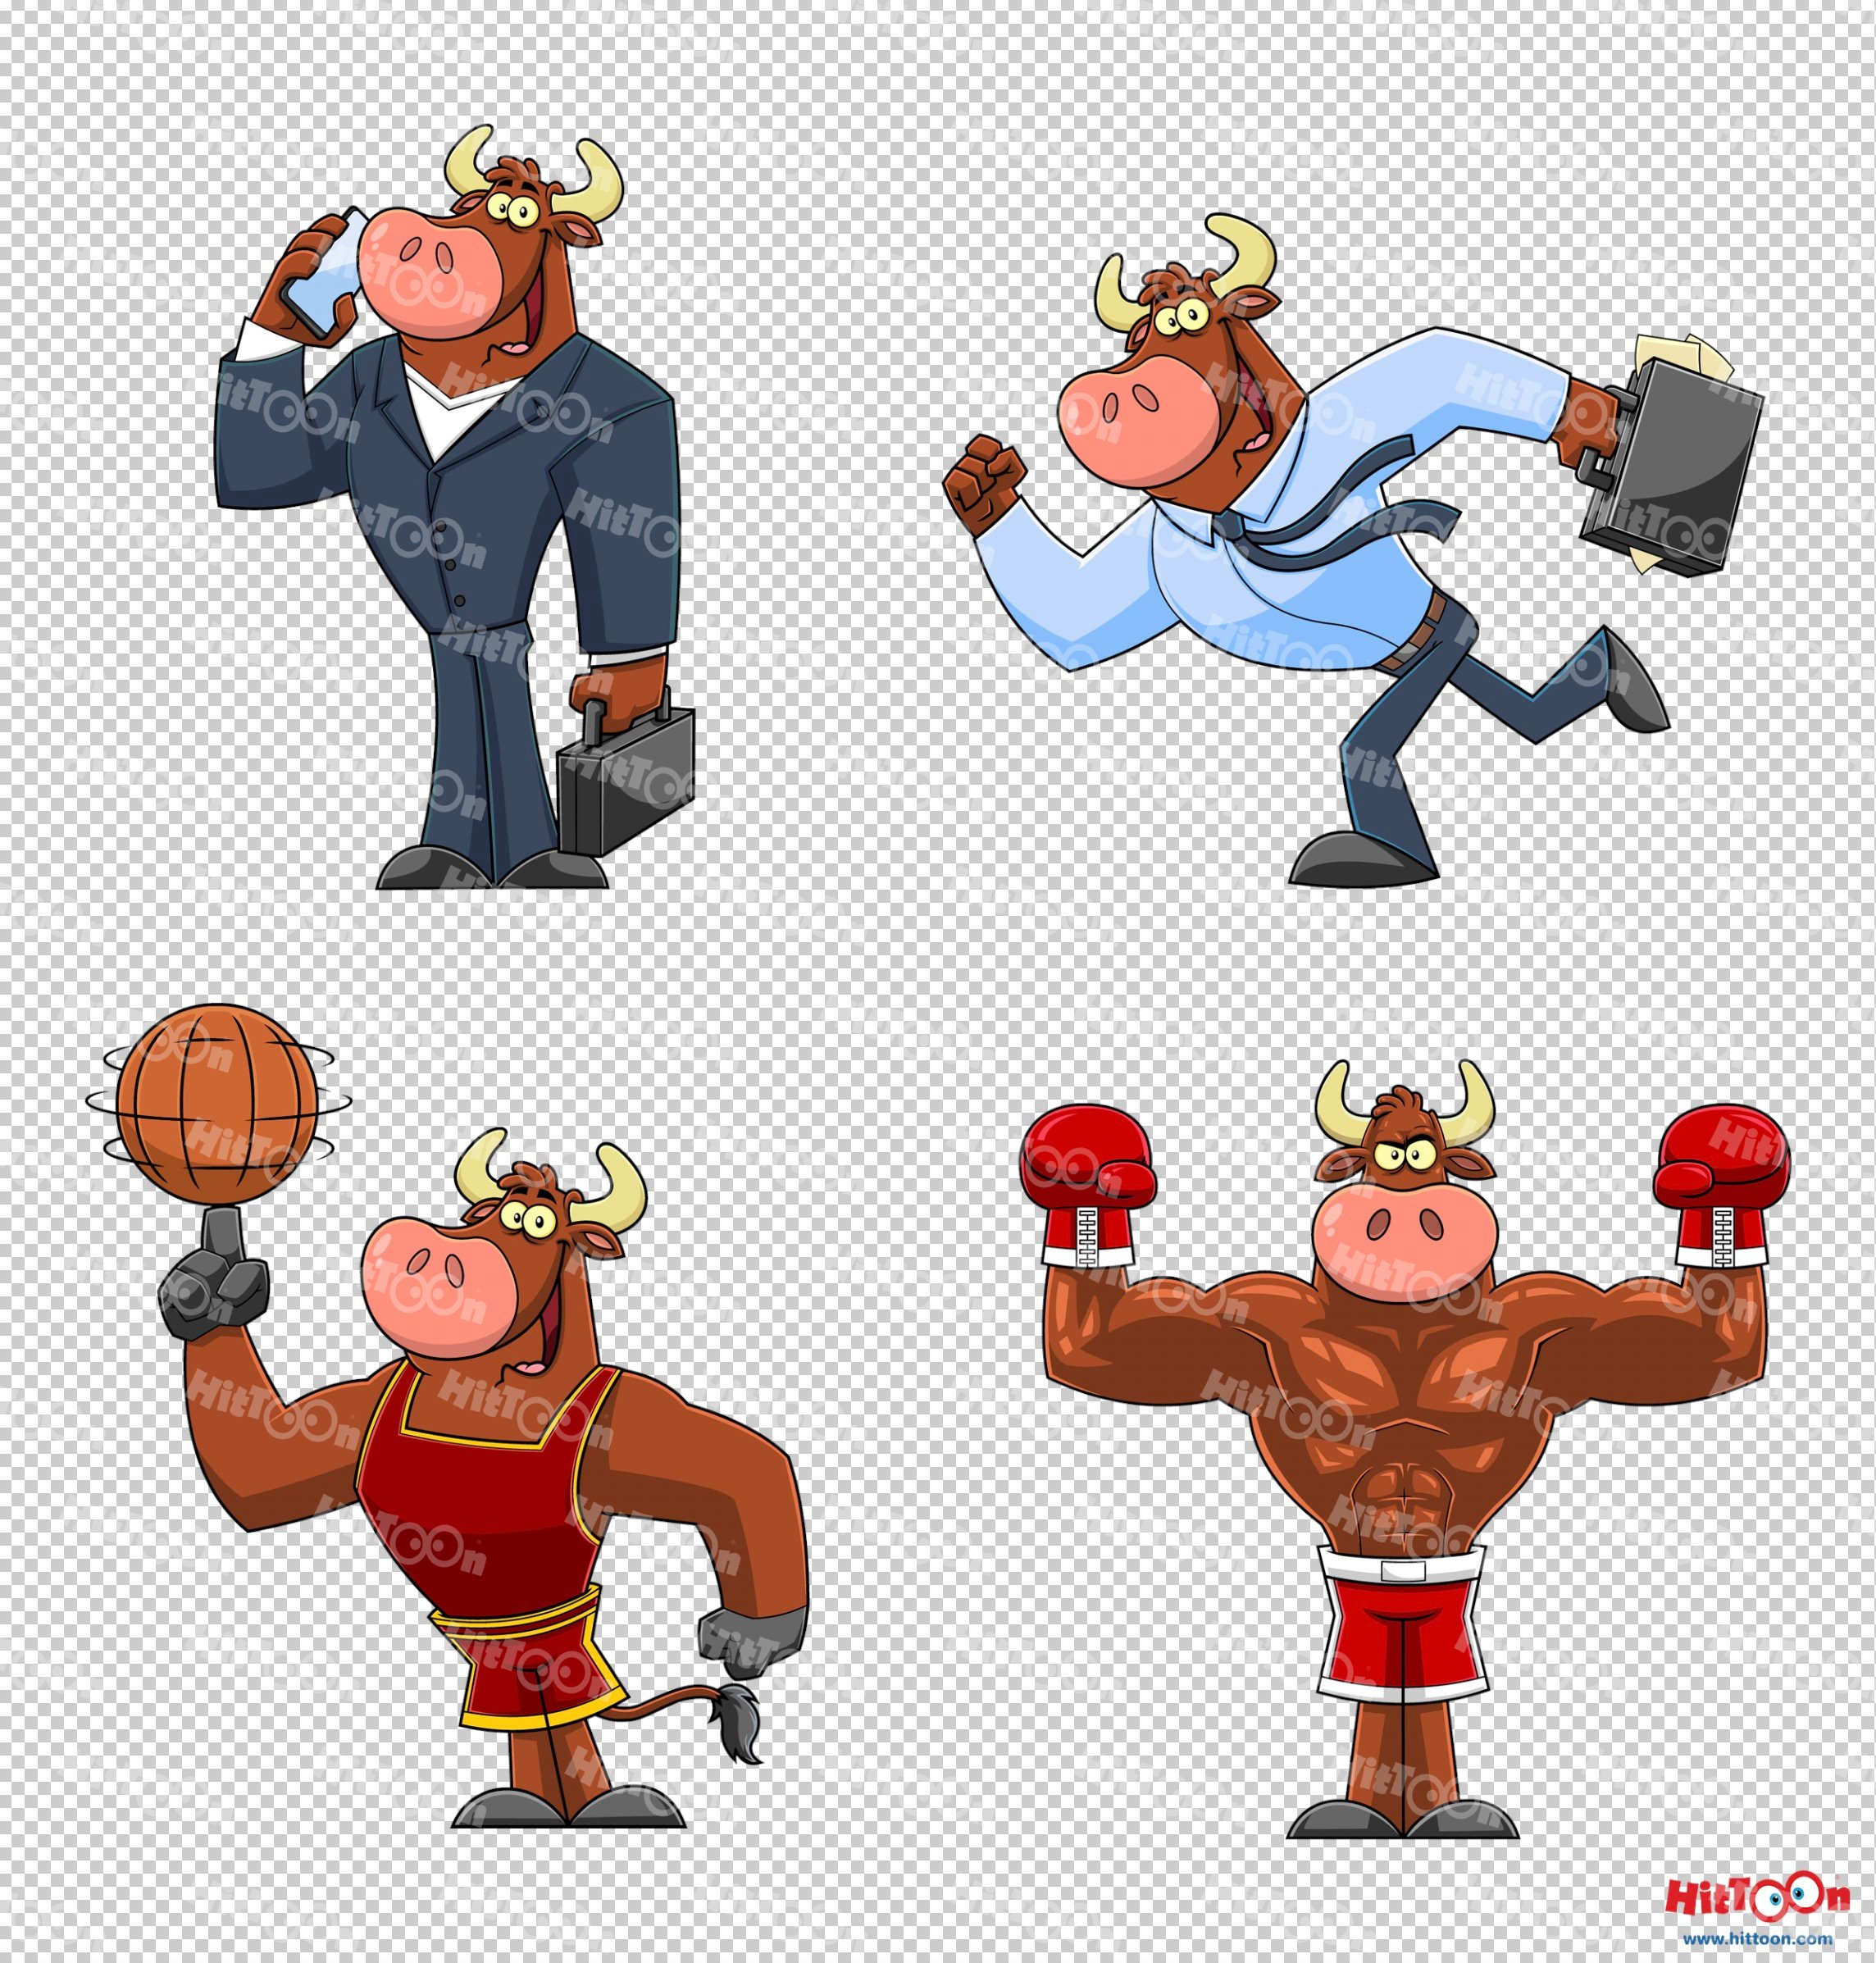 Bull Cartoon Mascot Character 1 preview image.